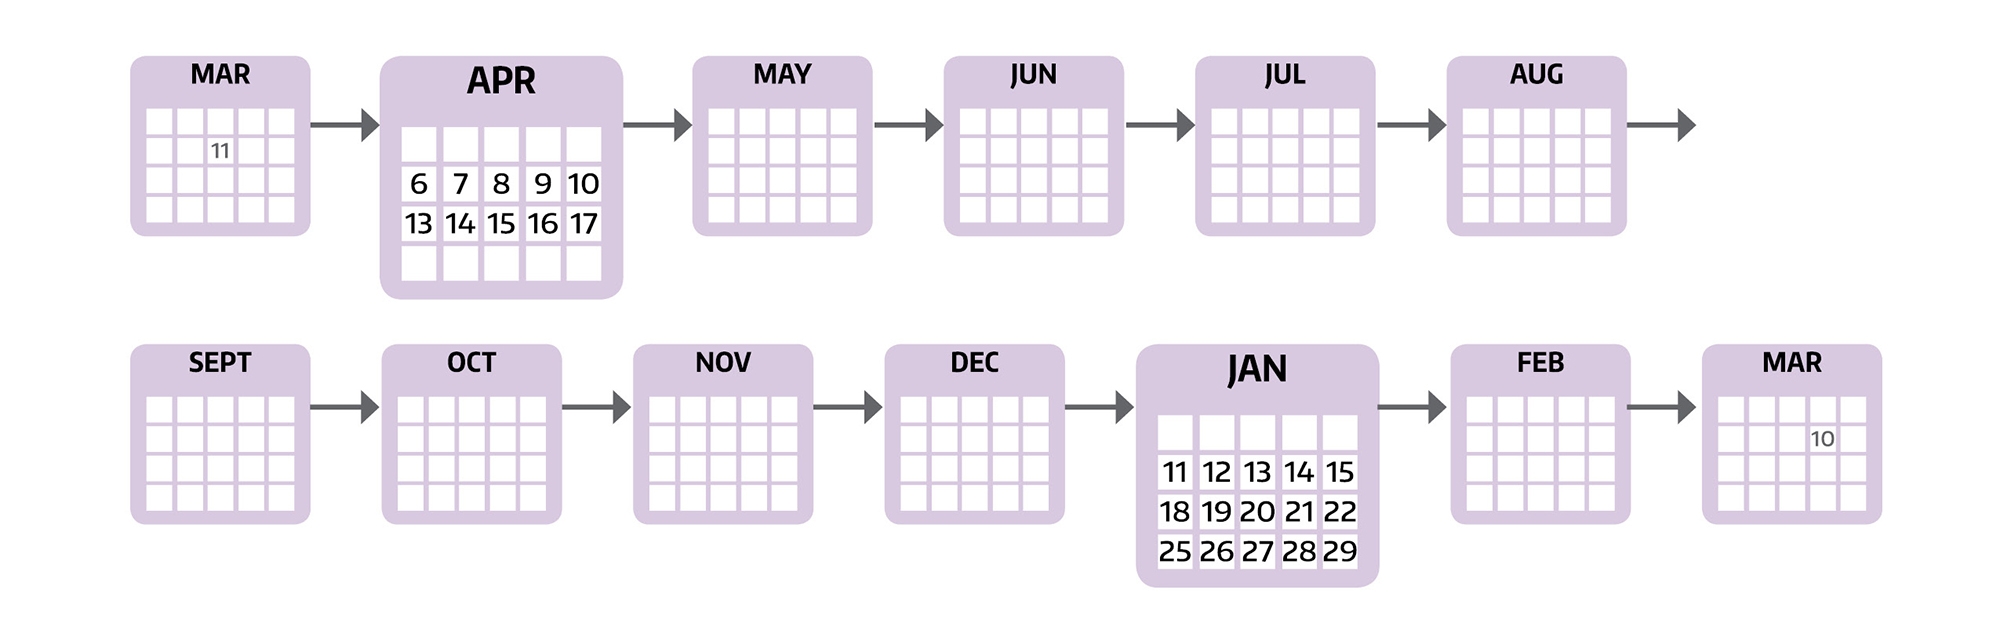 FMLA calendar Graphic 2